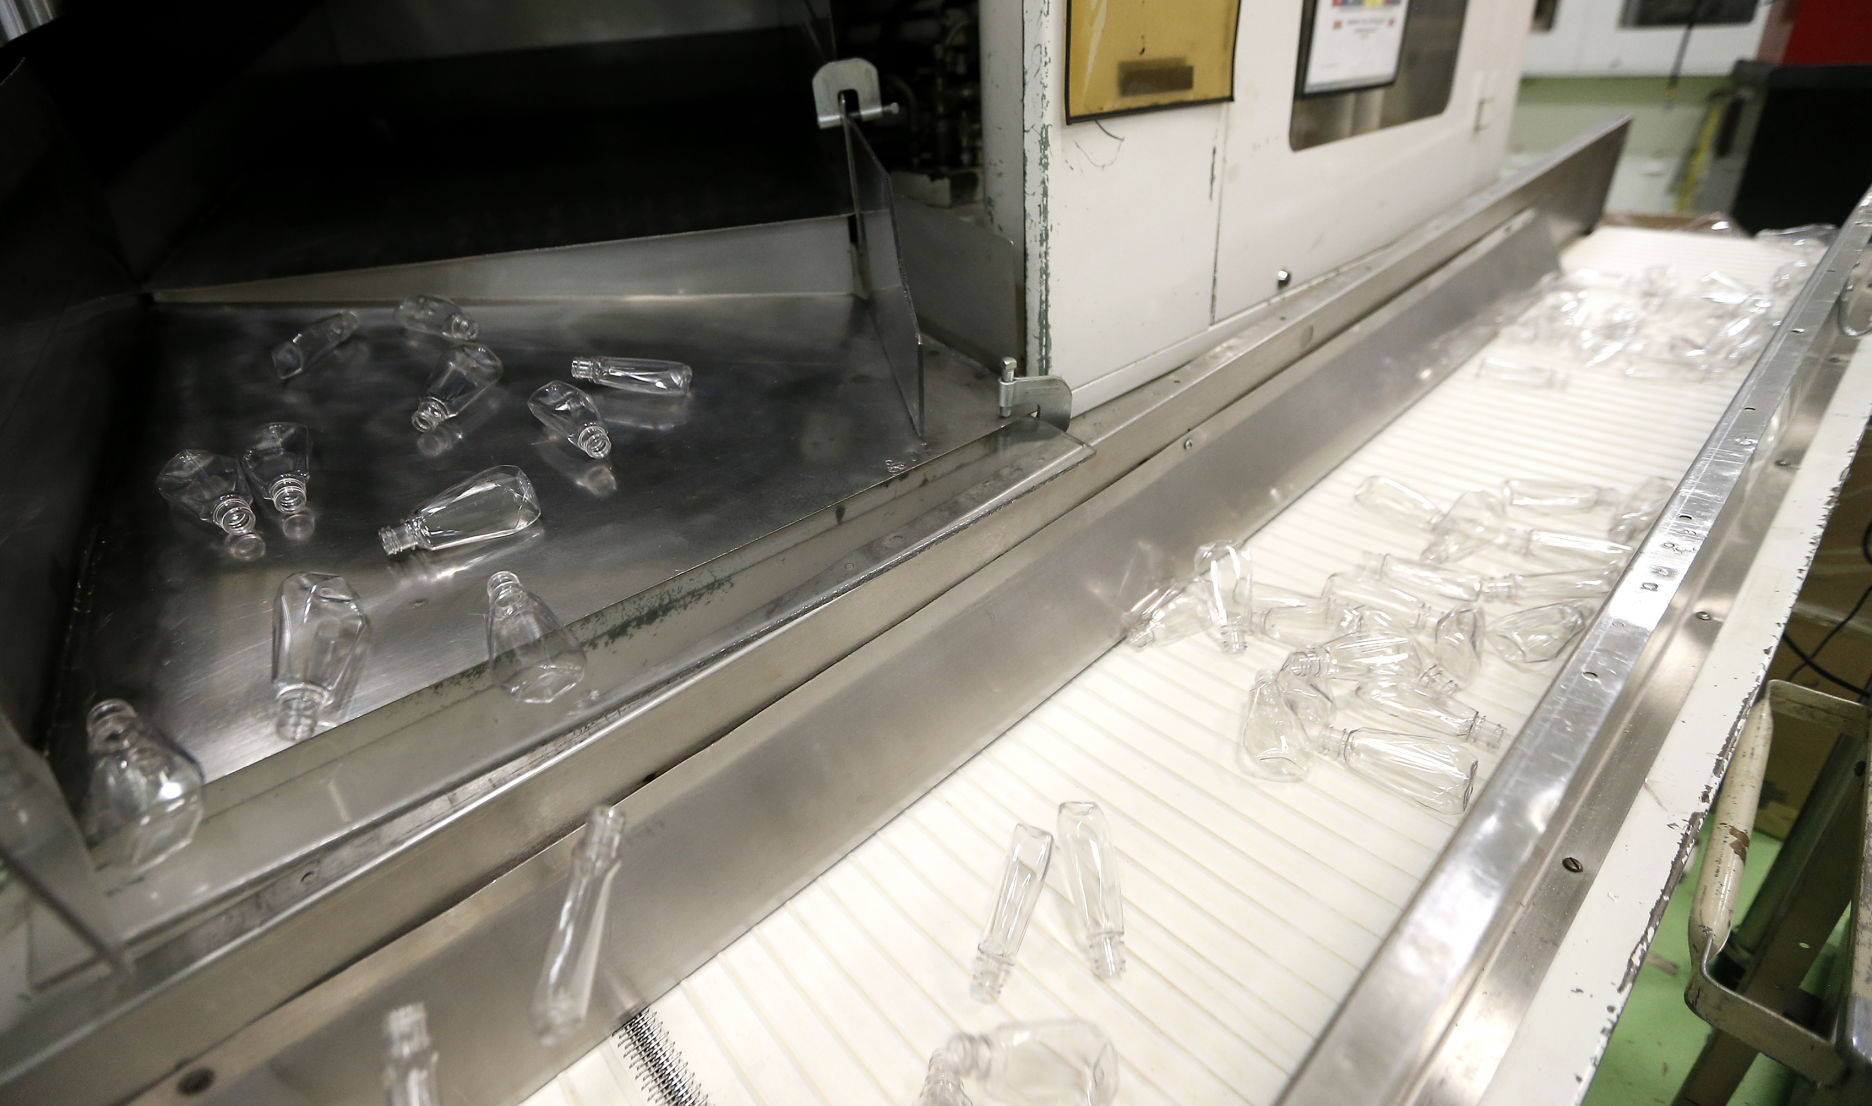 A machine kicks mouthwash bottles onto a conveyor belt inside Berry Plastics located in Peosta, Iowa. PHOTO CREDIT: DAVE KETTERING